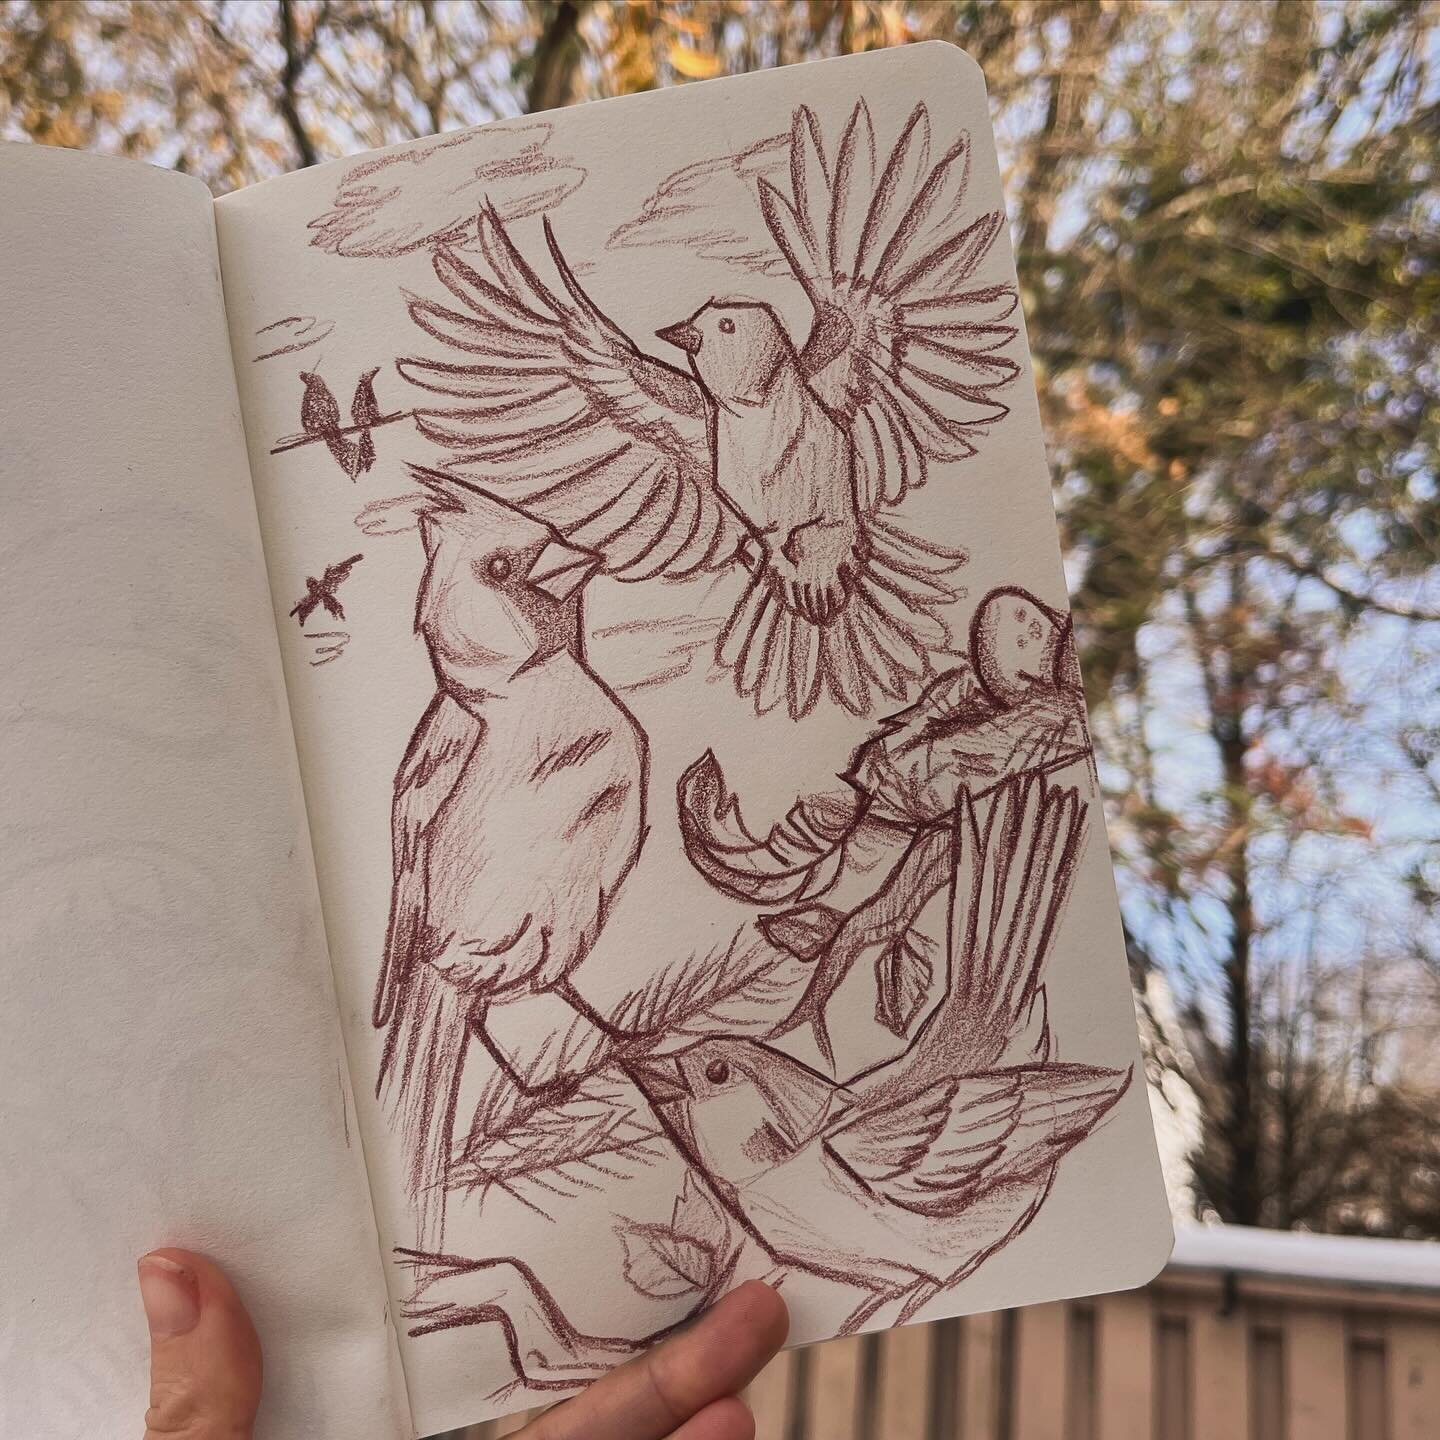 ✨Daily Sketch from last weekend✨

#cardinalbird #dailysketch #sketchbook #prismacolor #sketching #birds #artistsoninstagram #artoftheday #arttherapy